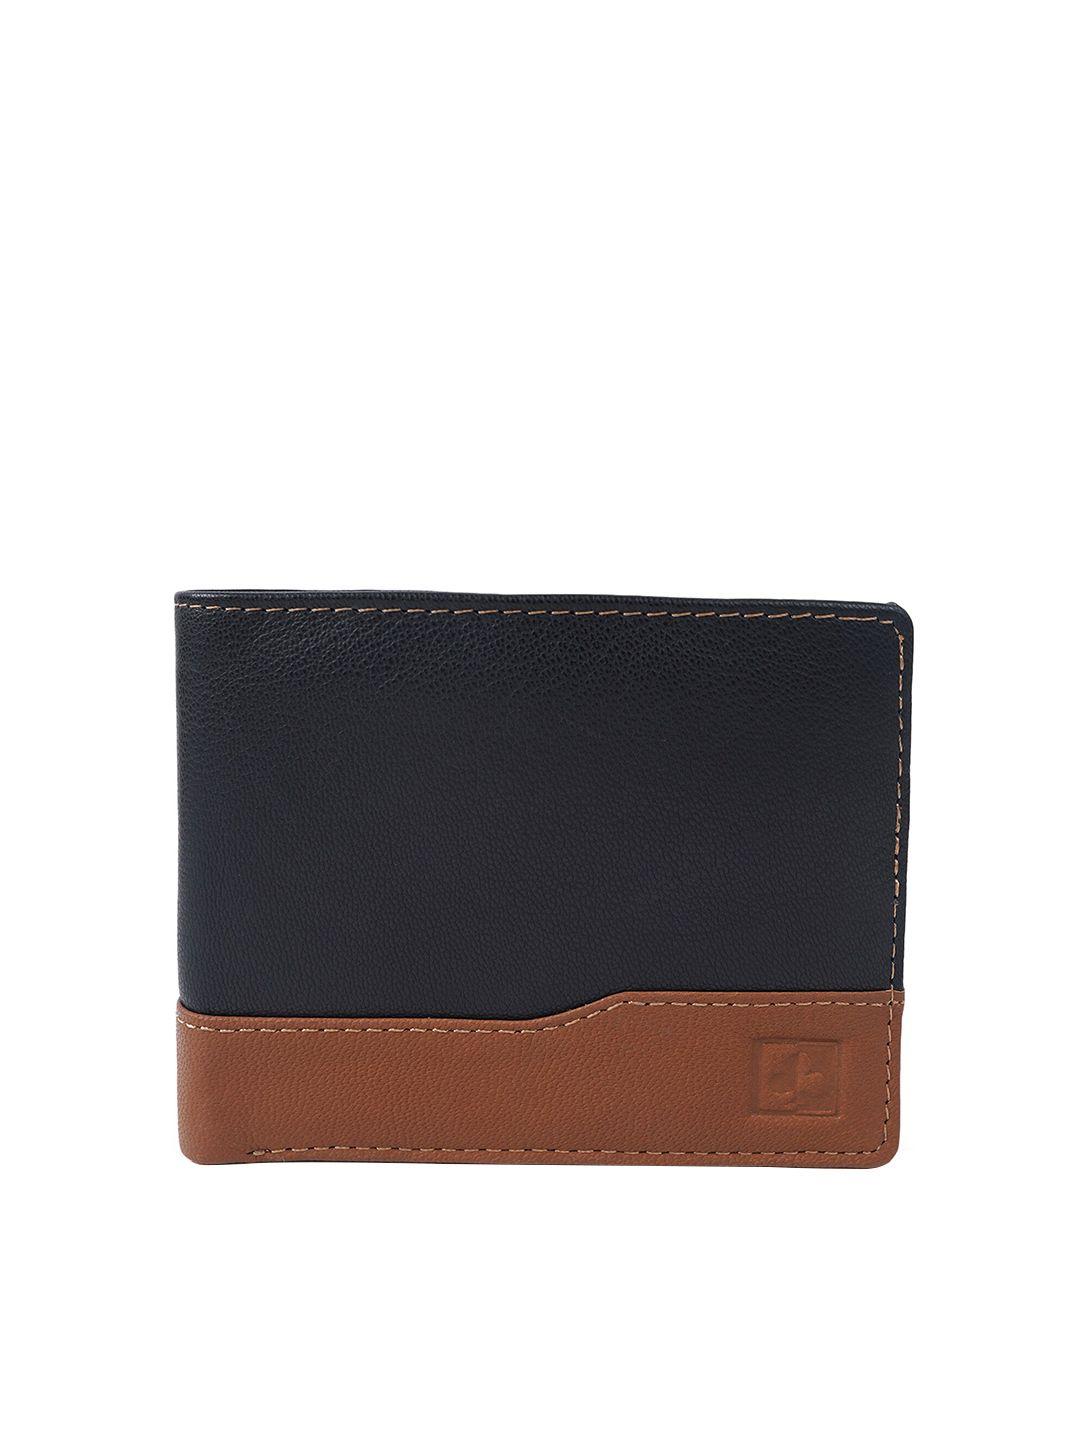 cimoni unisex black & brown colourblocked leather two fold wallet